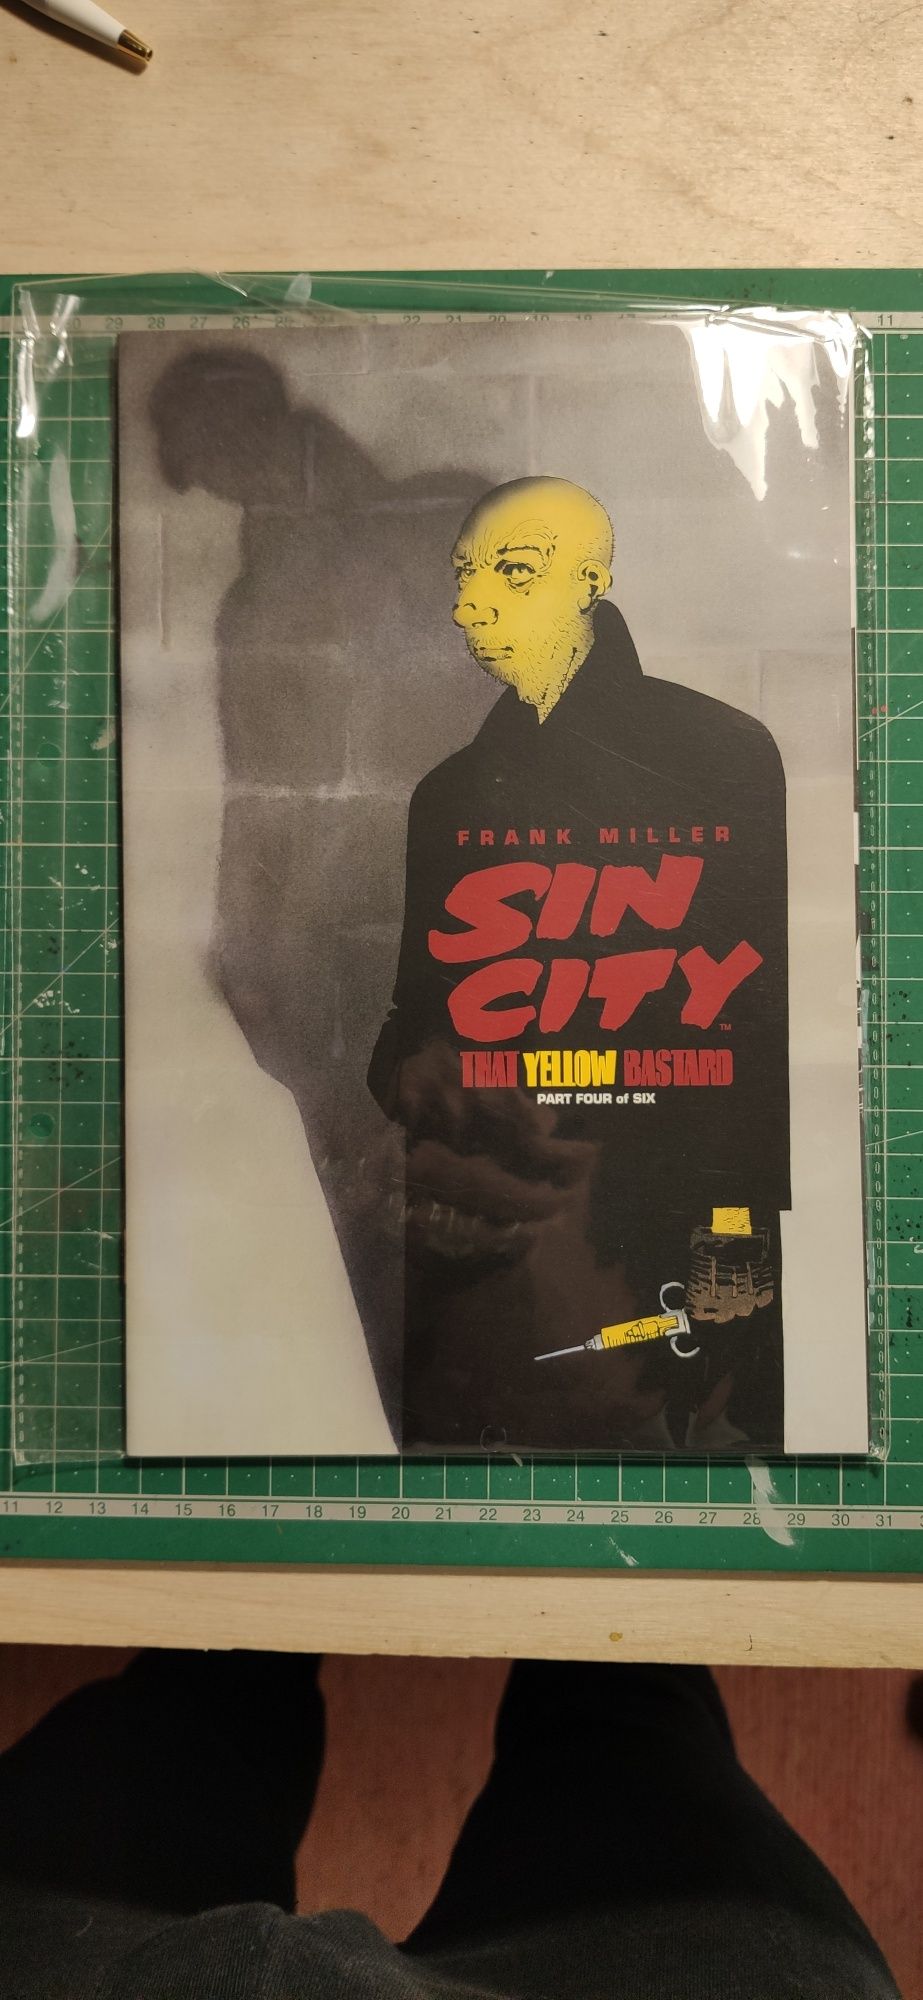 Sin city - That Yellow Bastard